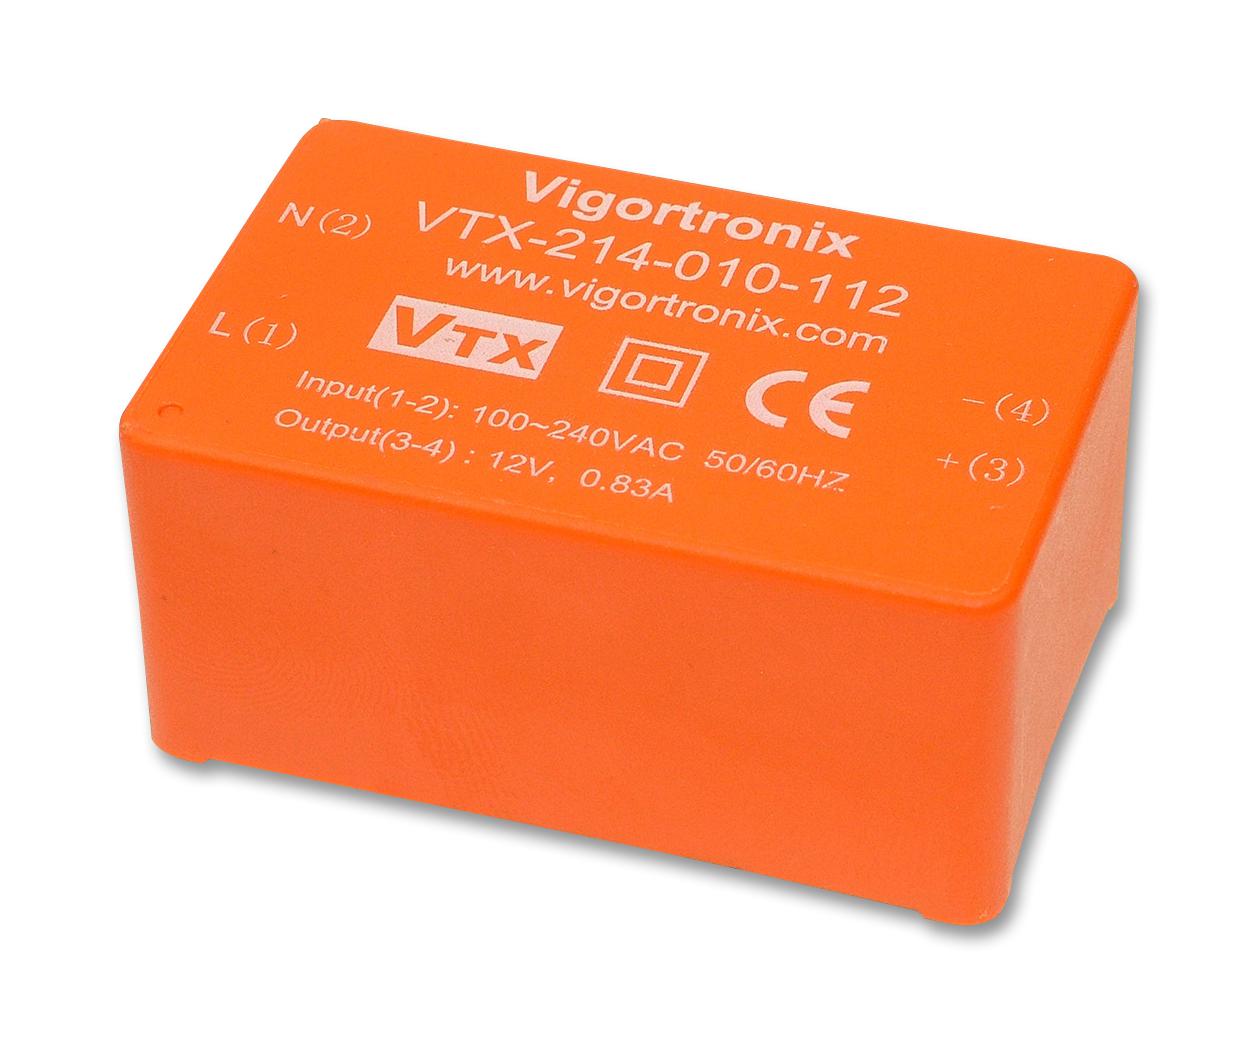 VTX-214-010-105 AC-DC CONV, FIXED, 1 O/P, 10W, 5V VIGORTRONIX